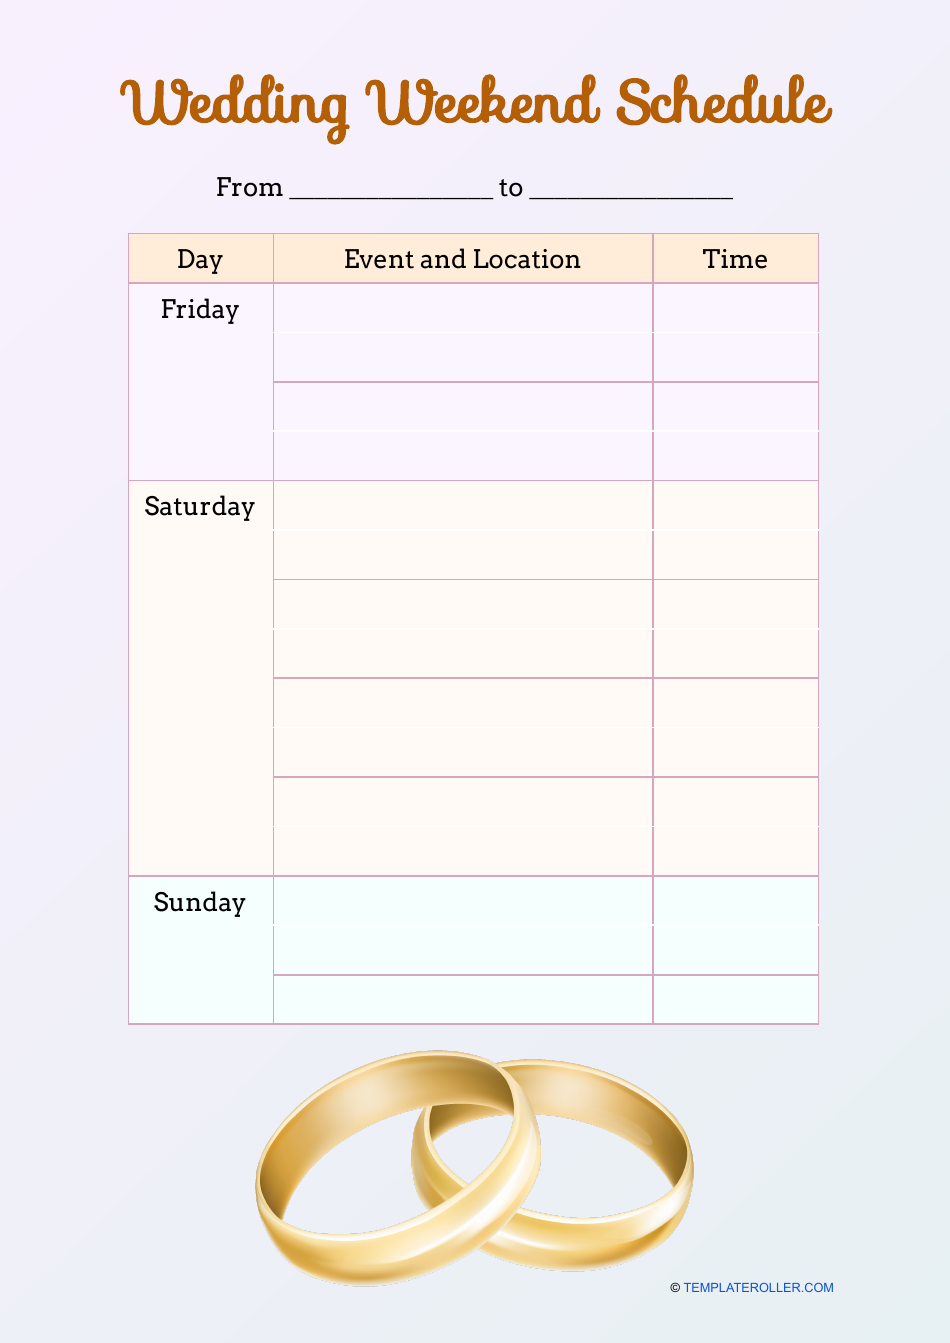 Wedding Weekend Schedule Template